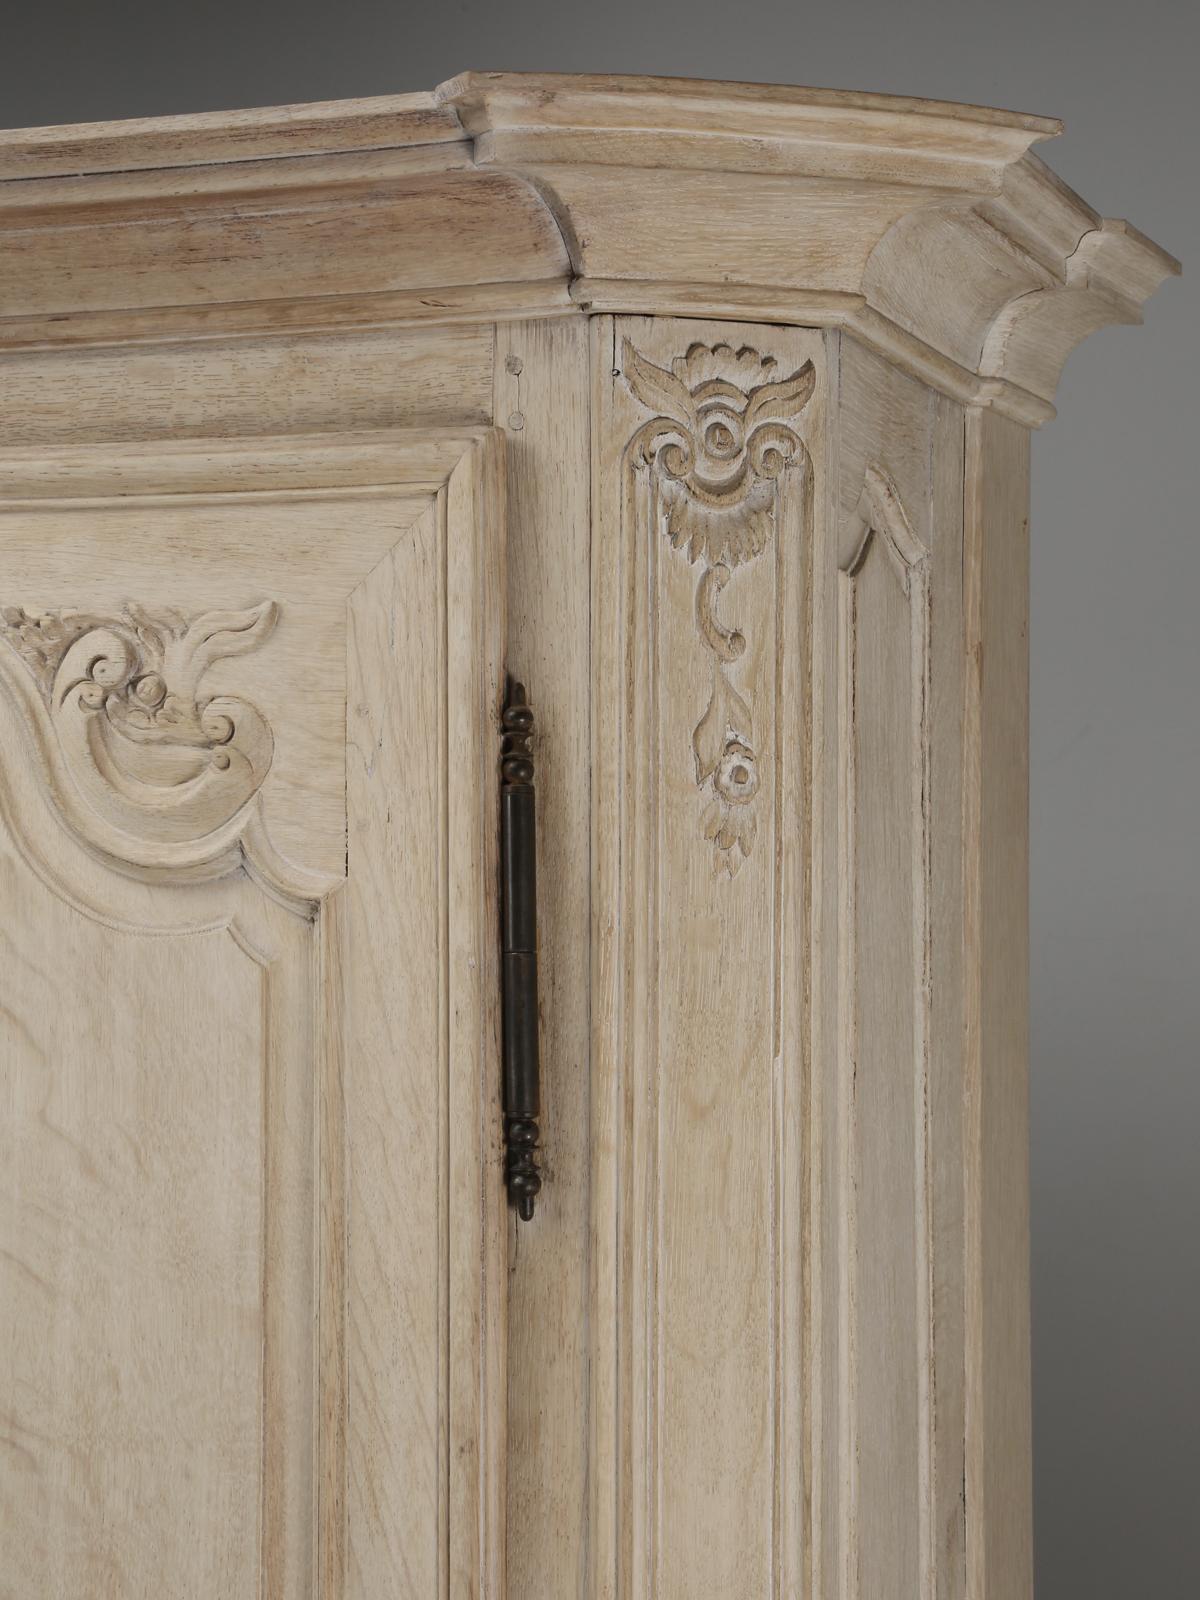 Hand-Carved Antique French Bookcase or Cabinet in Limed White Oak Older Restoration c1800's For Sale